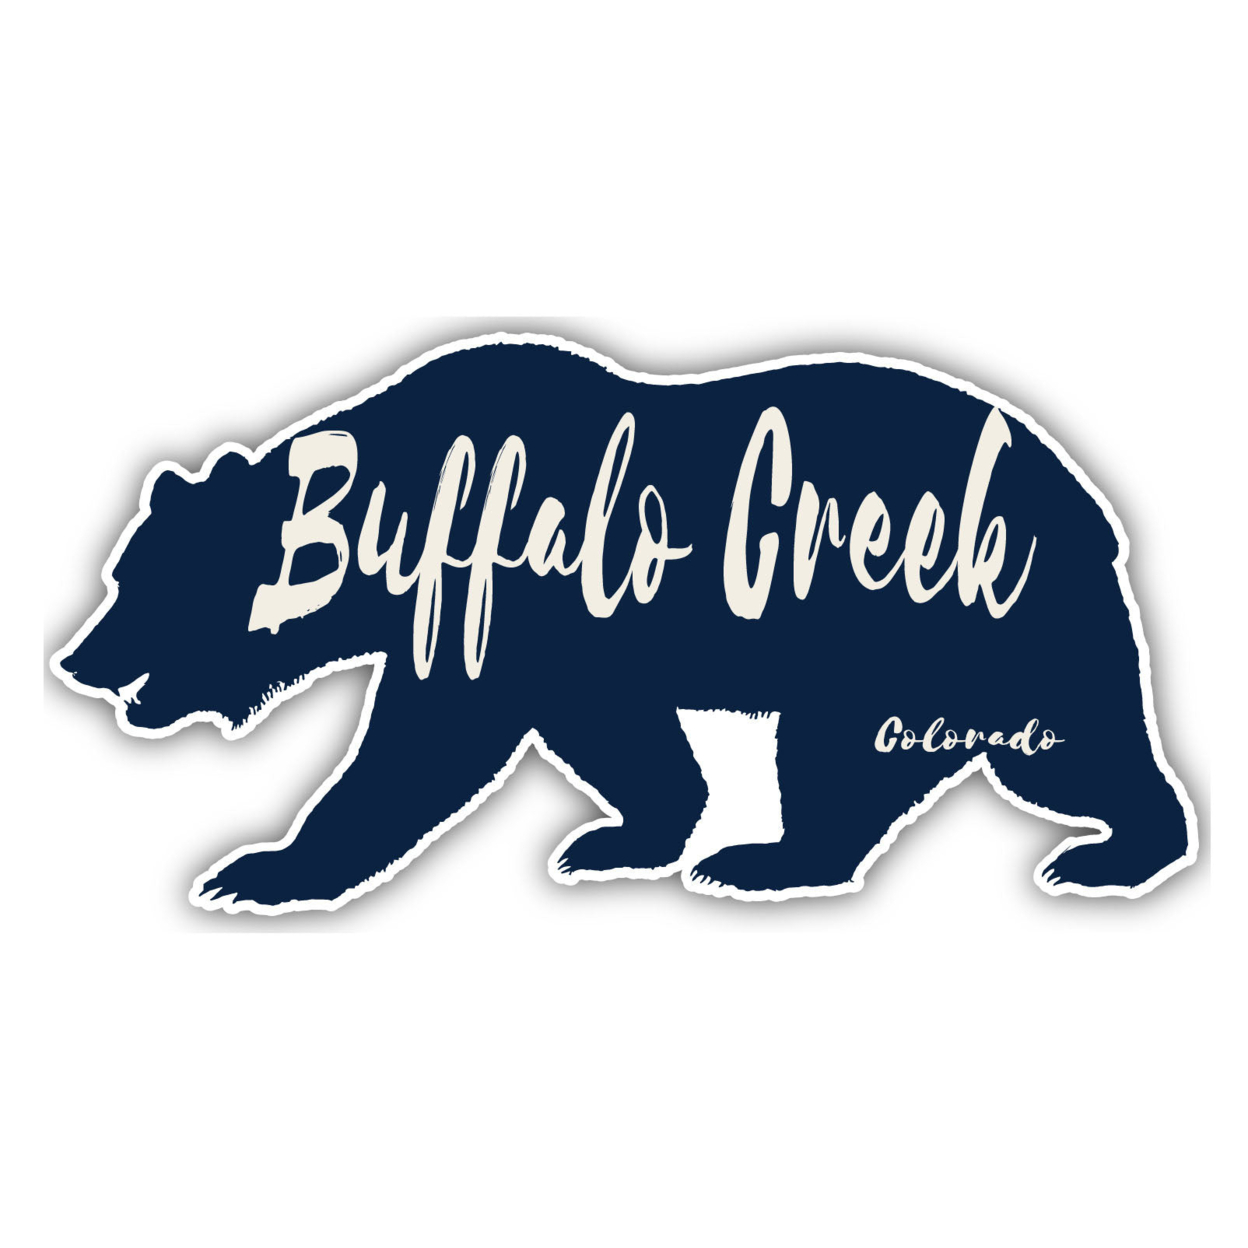 Buffalo Creek Colorado Souvenir Decorative Stickers (Choose Theme And Size) - 4-Pack, 12-Inch, Bear